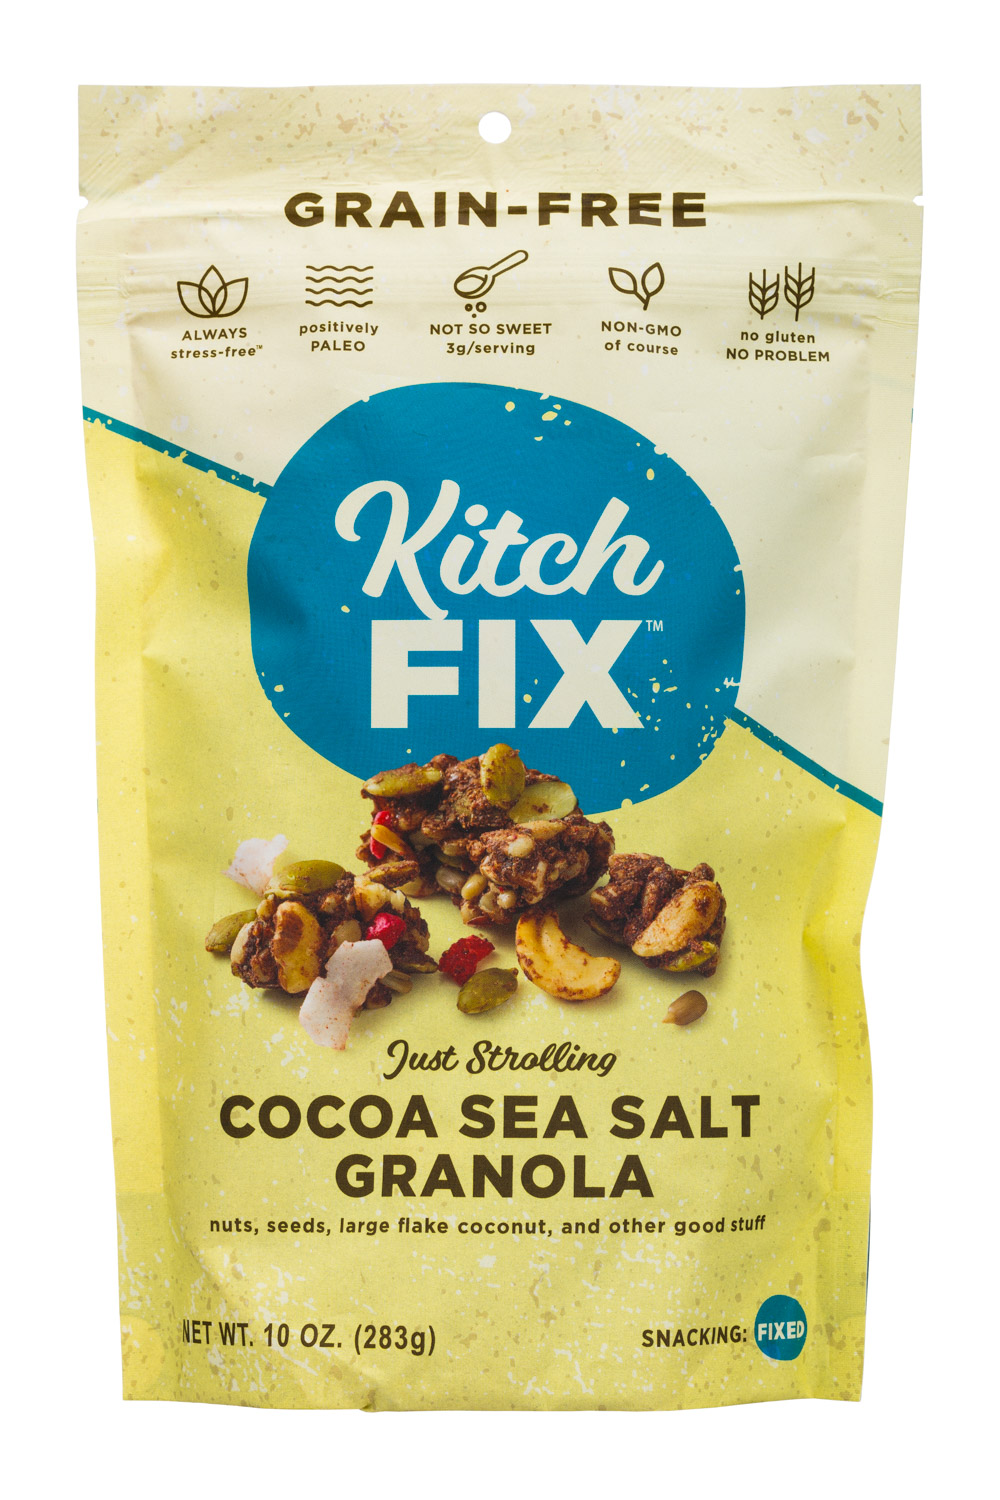 Cocoa Sea Salt Granola